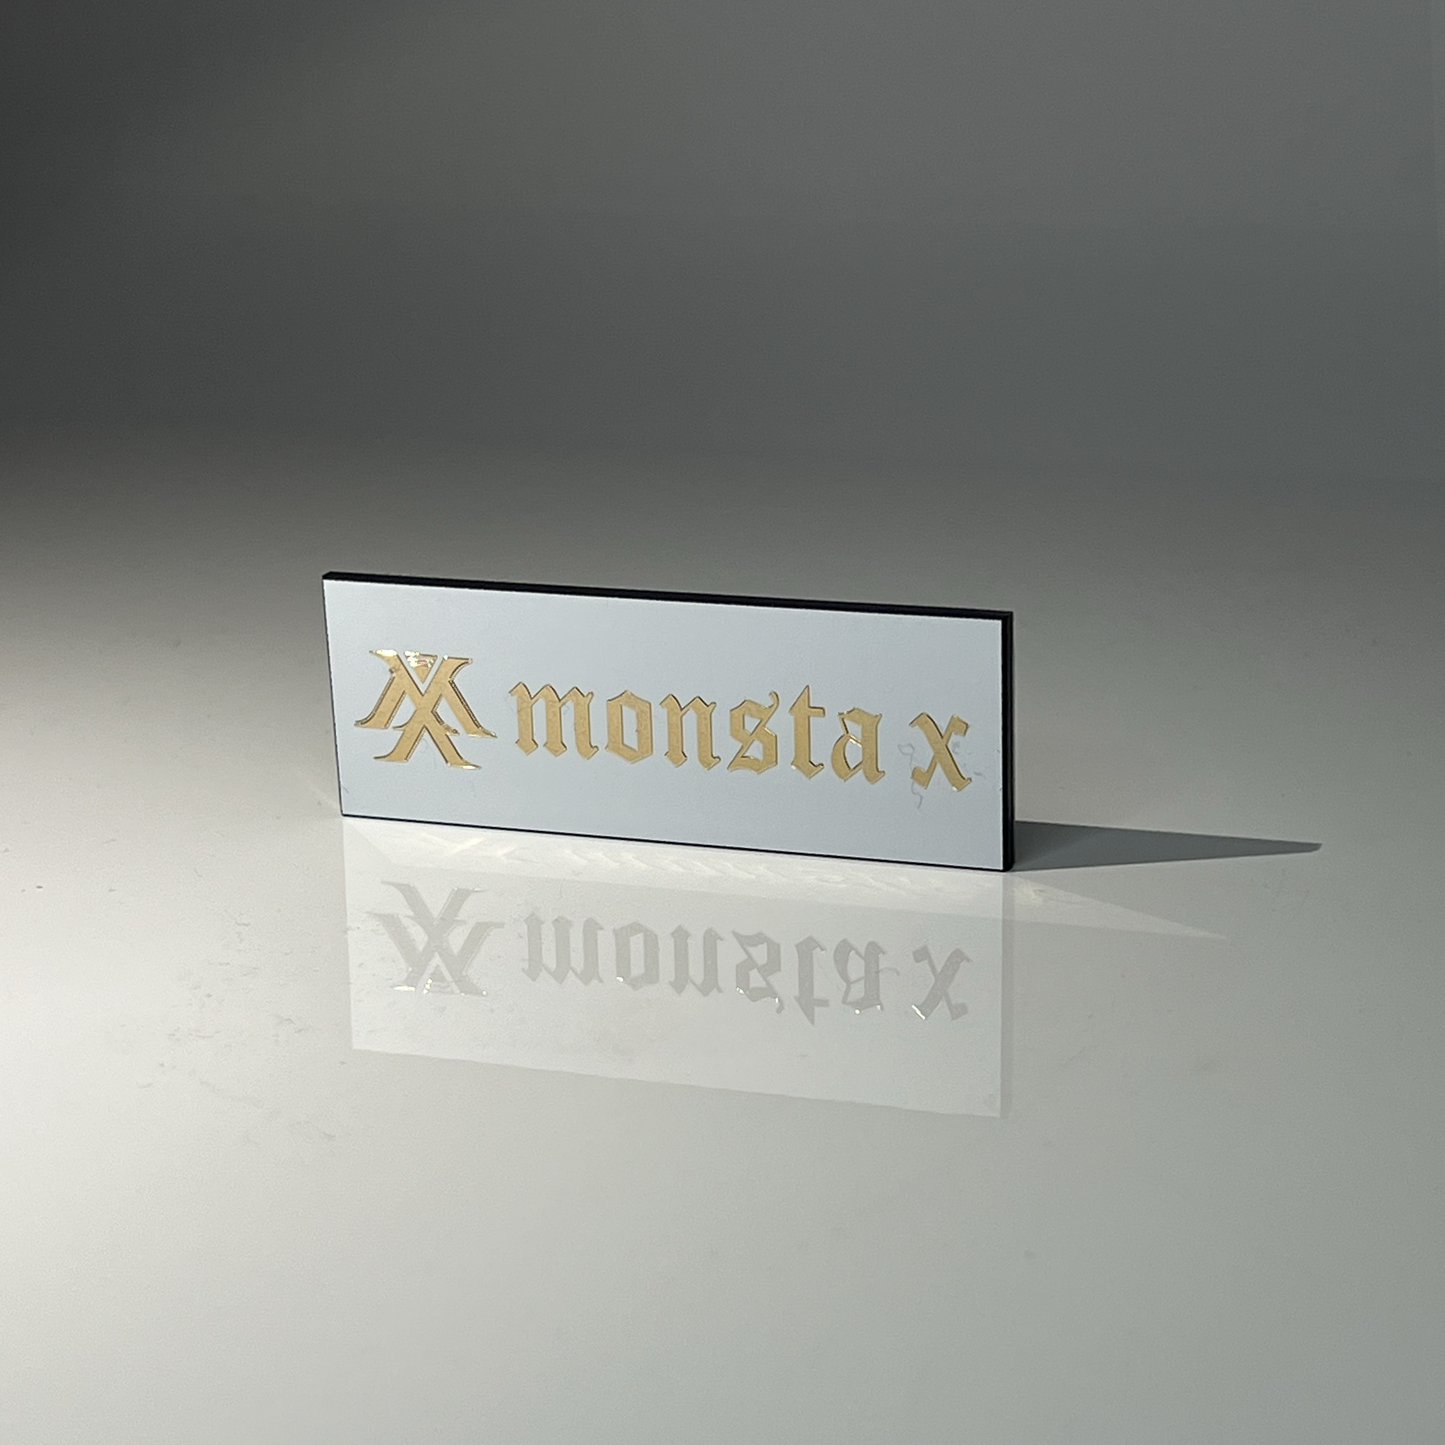 MONSTA X Name Badge